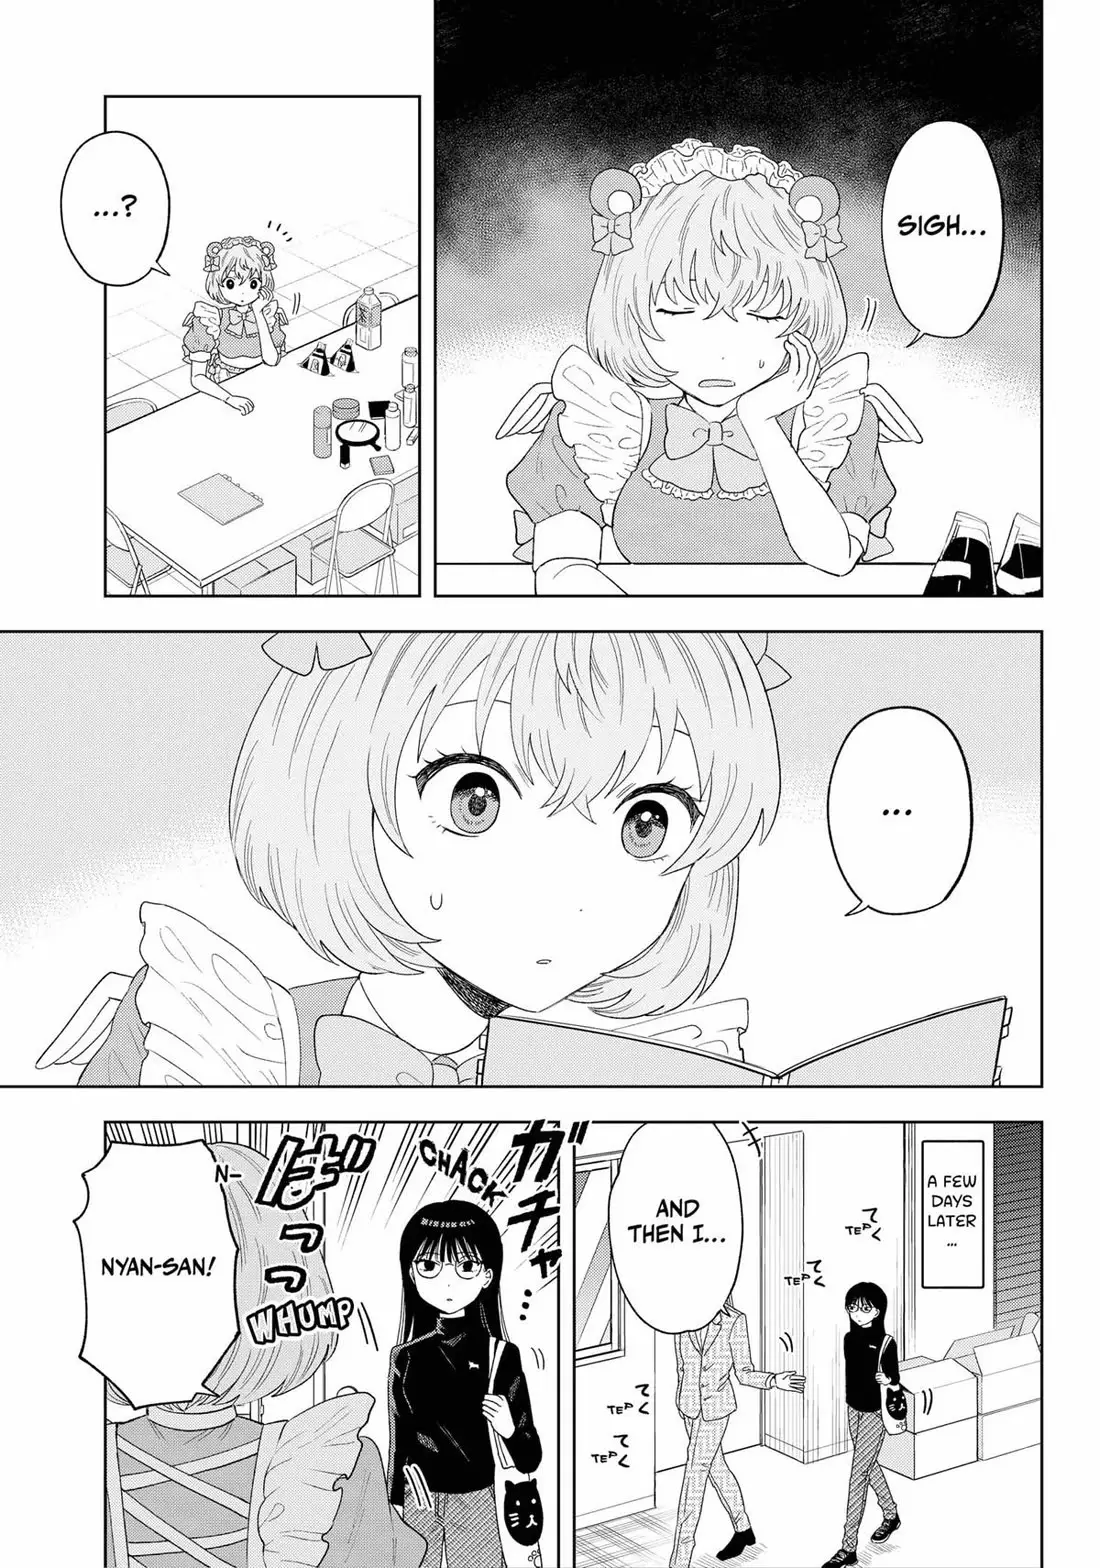 Tsuruko Returns The Favor - 16 page 11-677cbfb9